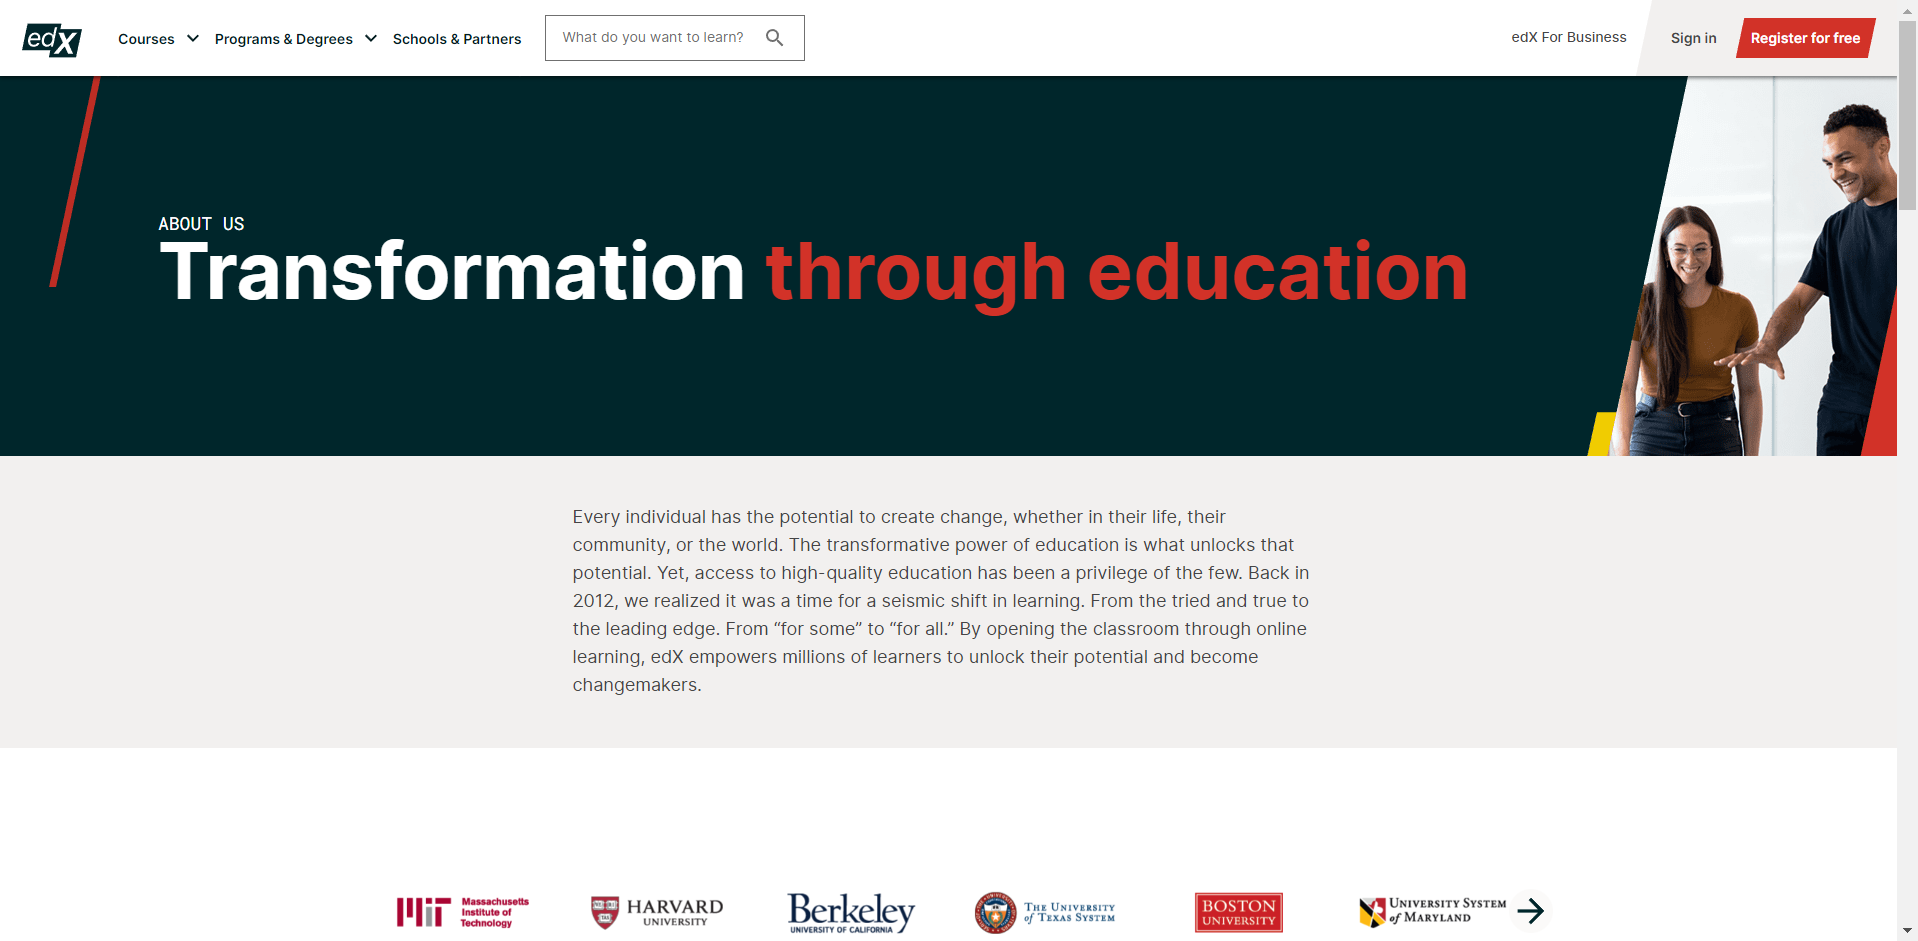 edX Transformation through education